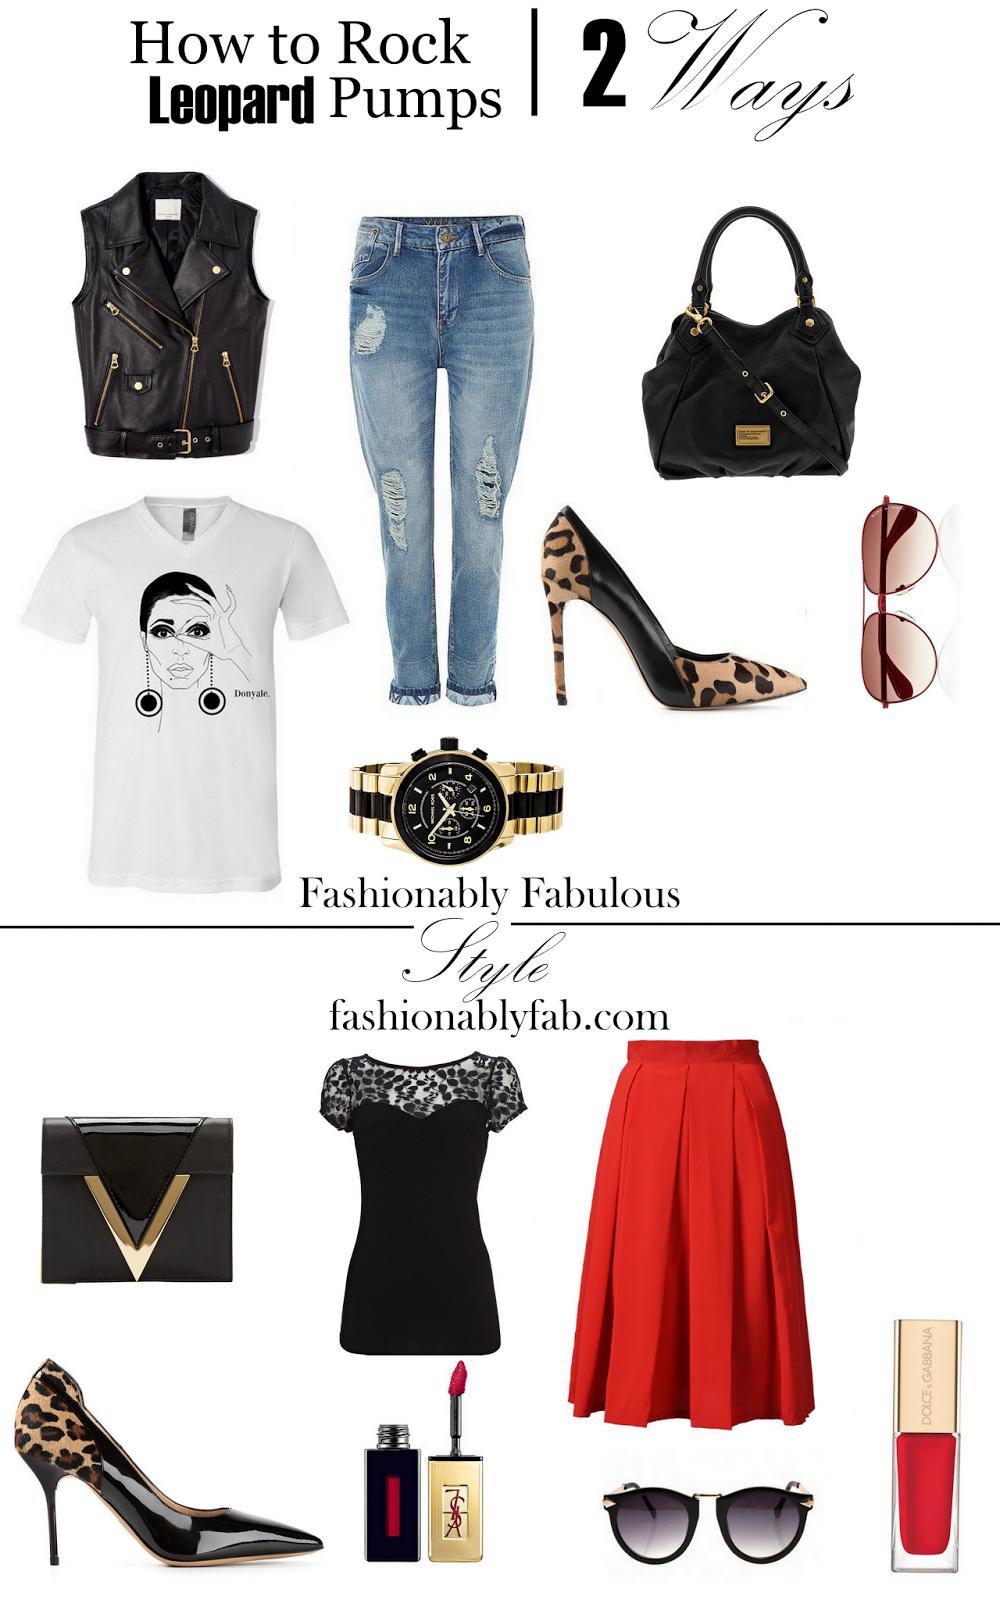 How to Wear Leopard Pumps: 2 Ways - Fashionably Fab Blog